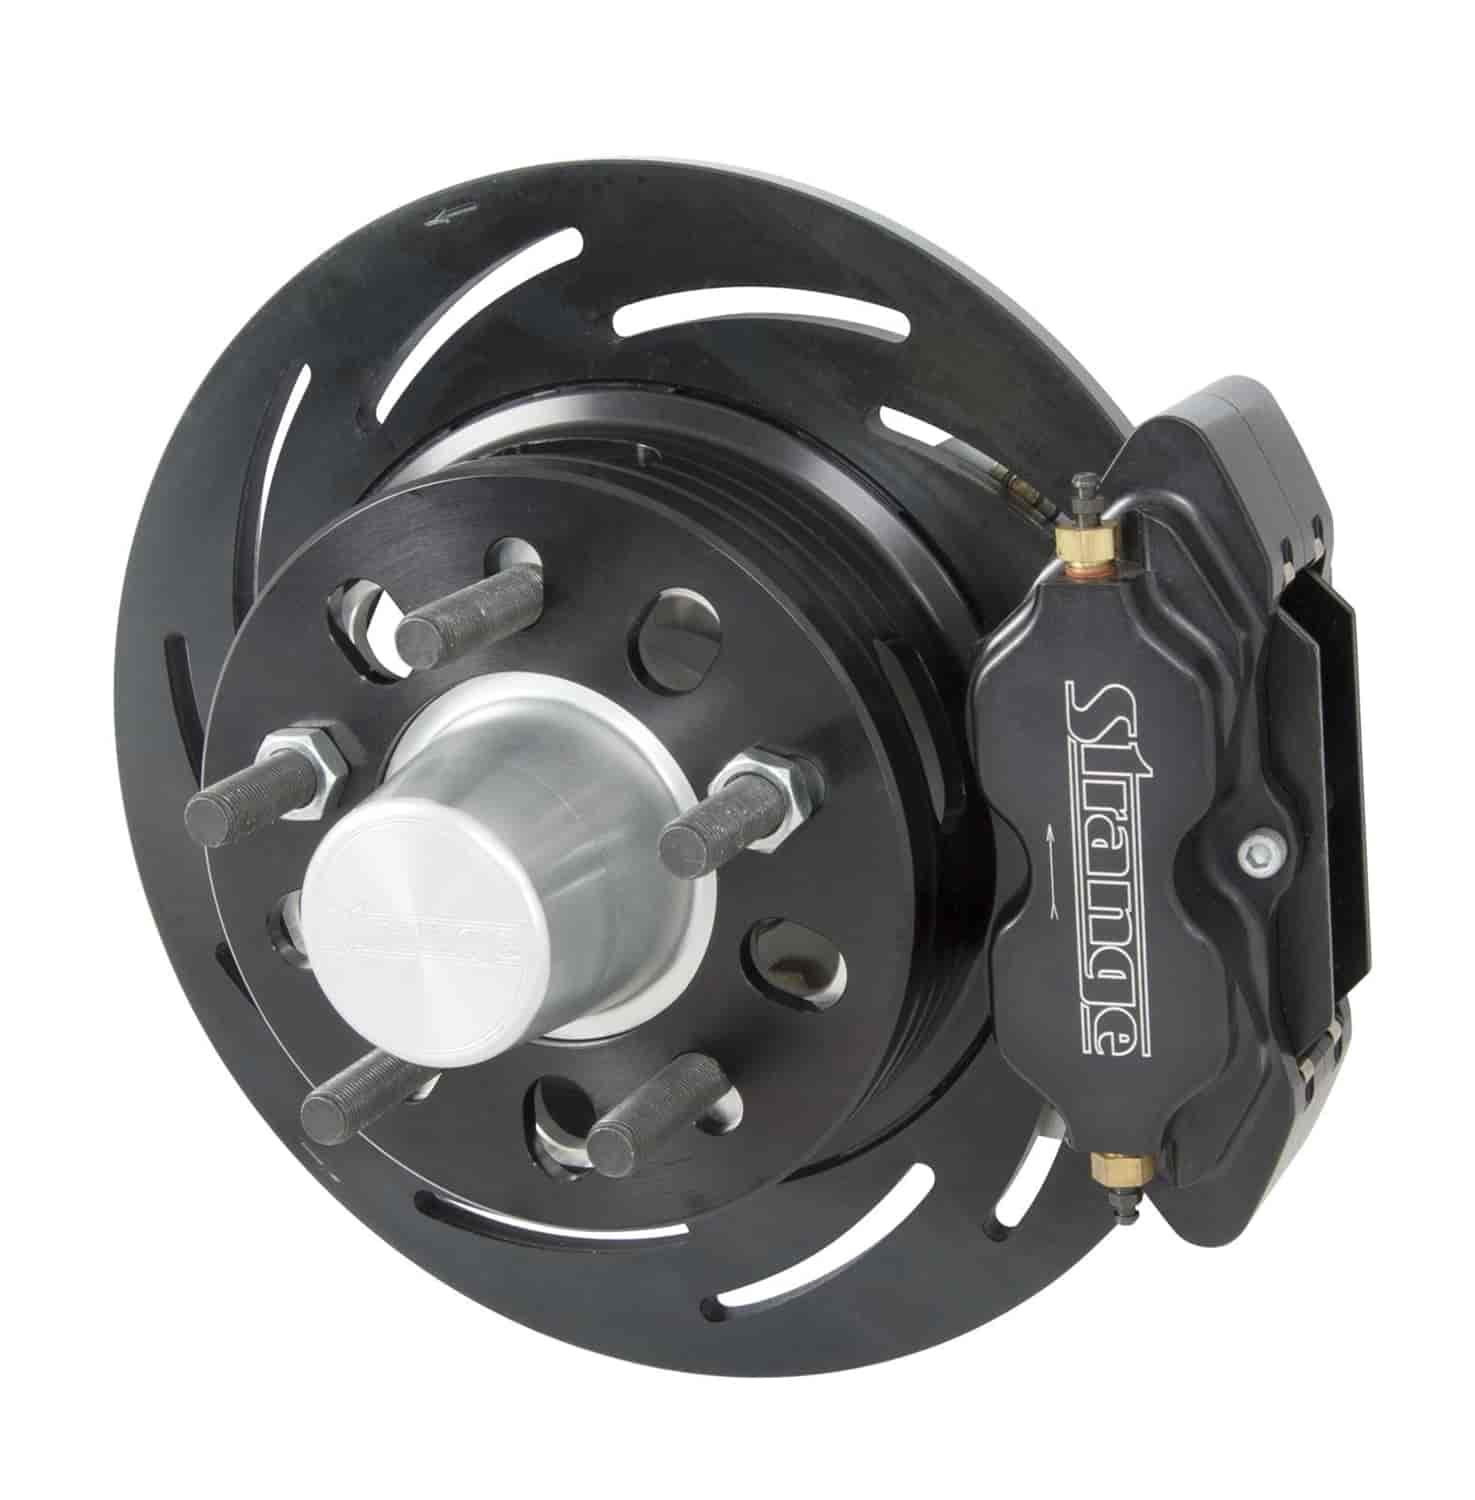 Front brake kit /Mopar drum spindles /4.50 bc /2 pc rotor